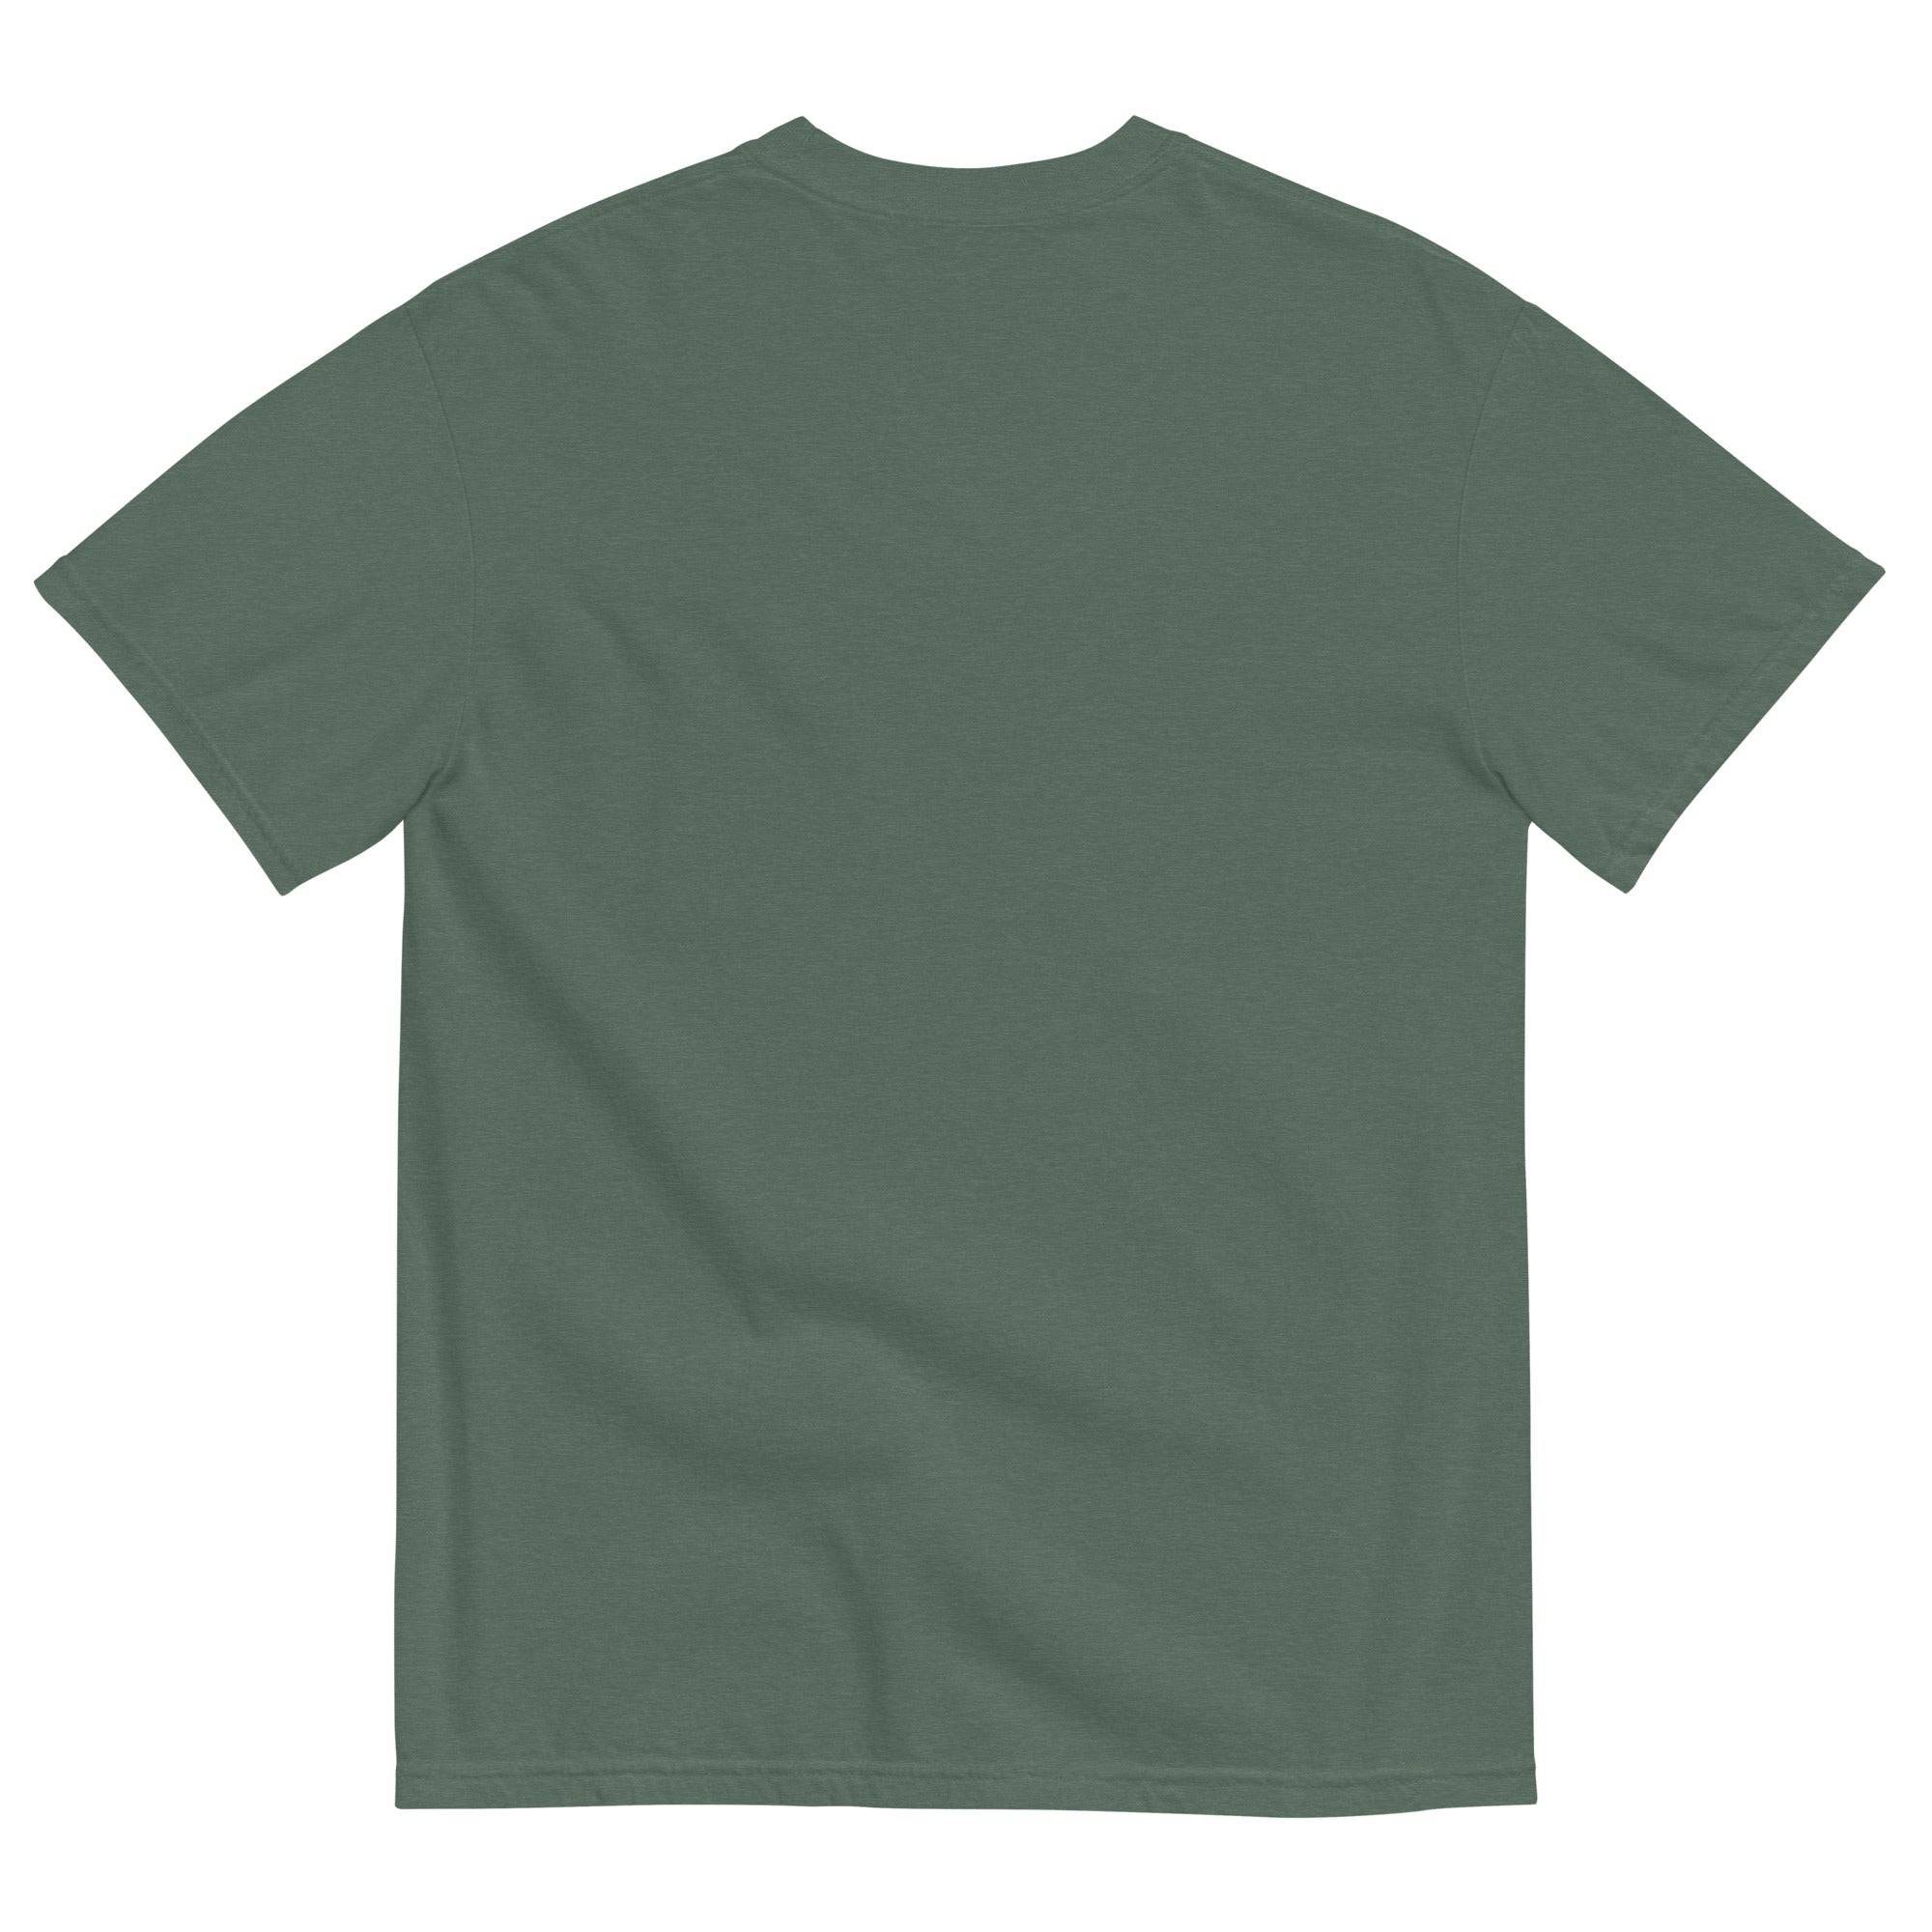 King me- Mens garment-dyed heavyweight t-shirt